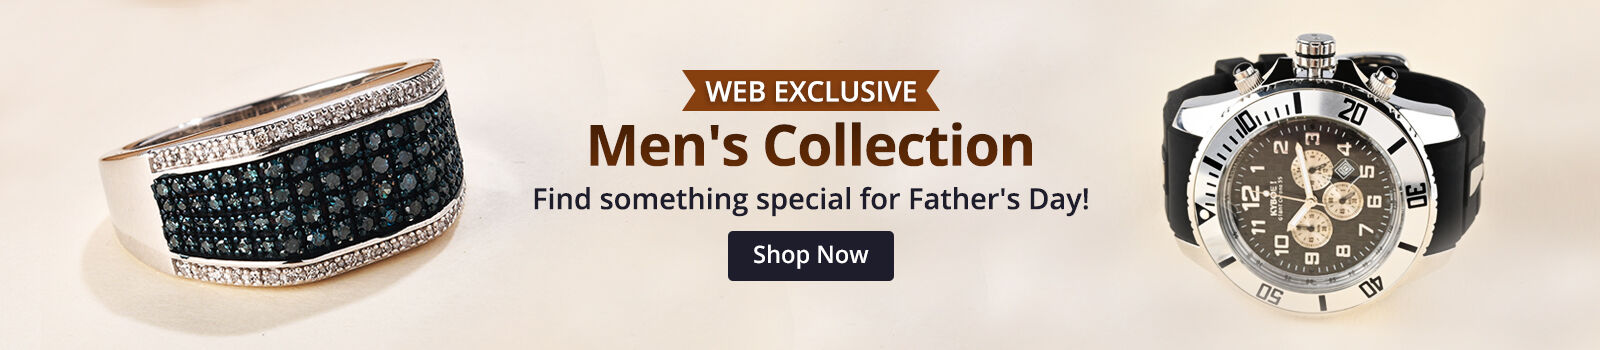 Web Exclusive Men's Collection